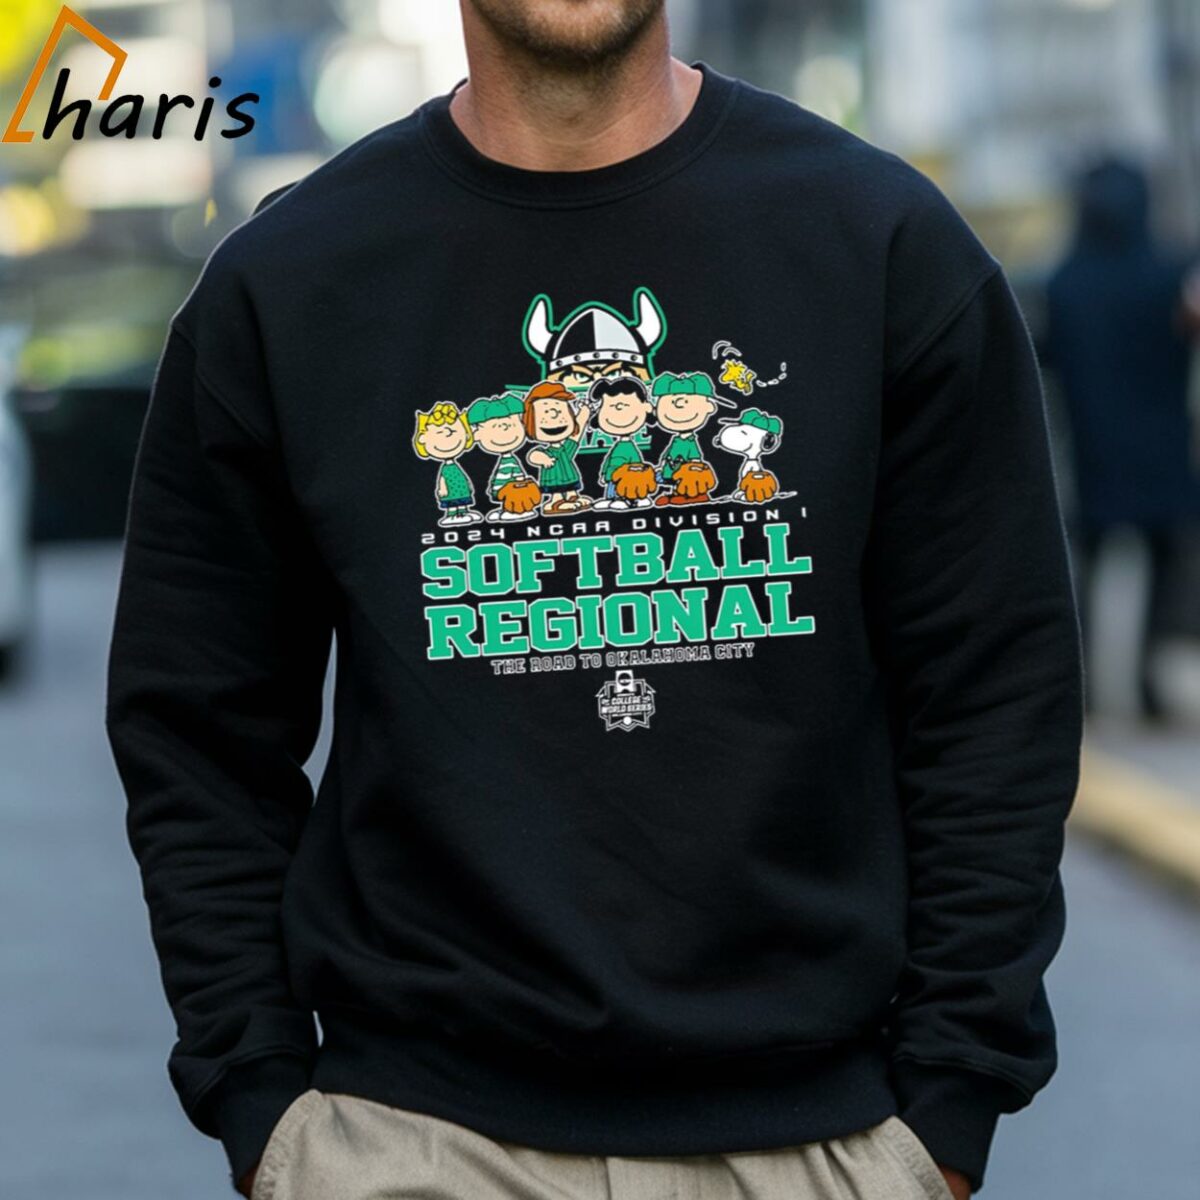 Peanuts Characters 2024 Ncaa Division I Softball Regional Cleveland State Vikings Logo Shirt 4 Sweatshirt